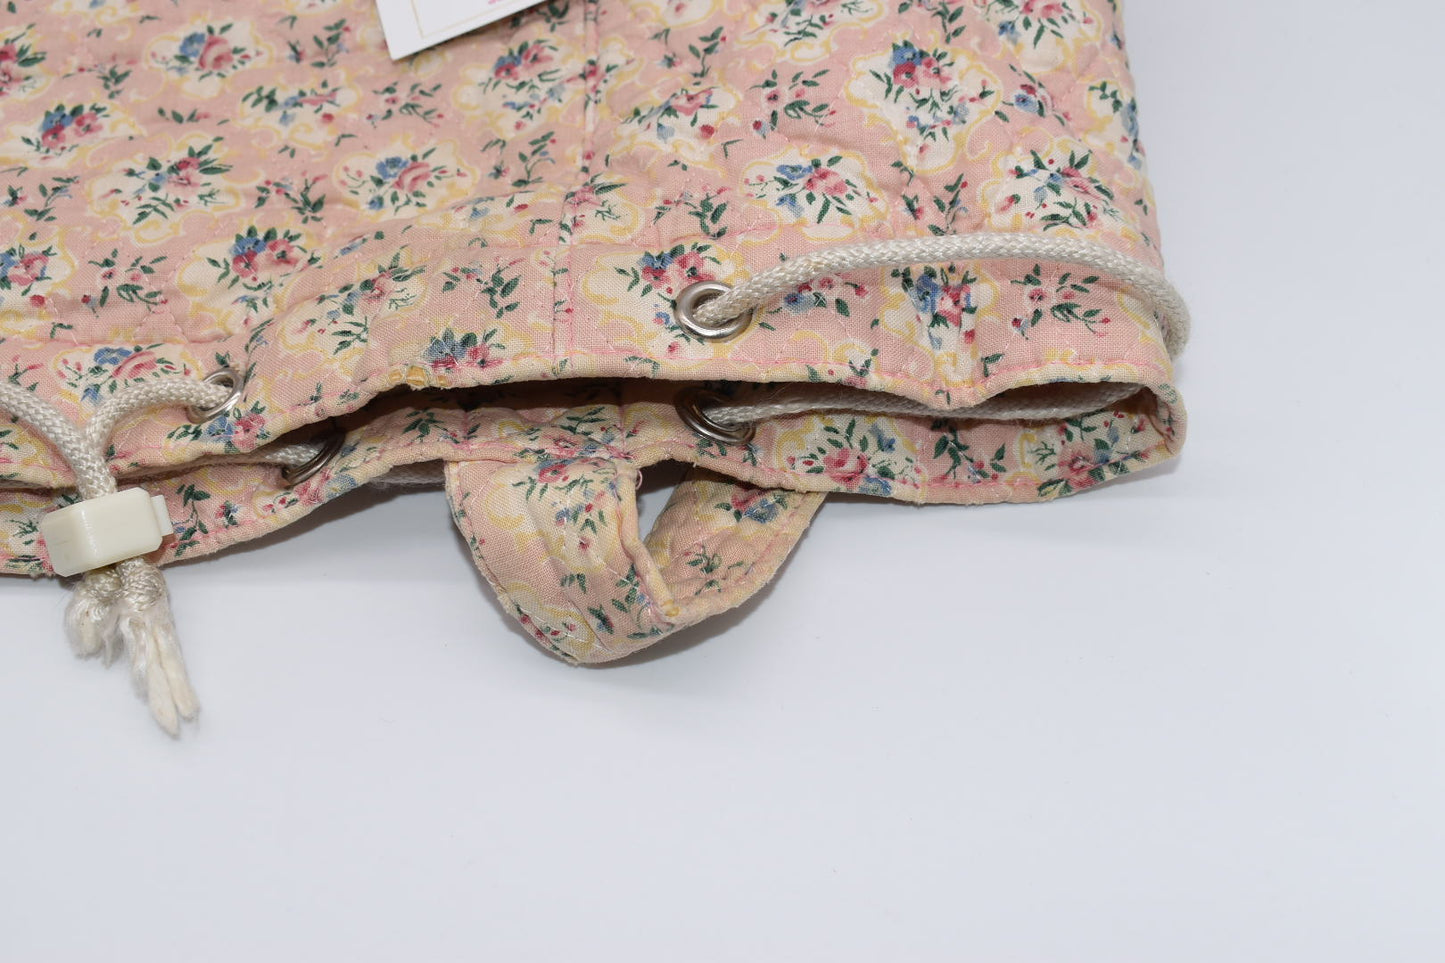 Vintage Vera Bradley Large Sling Bag in "Pastel Pink - 1996" Pattern